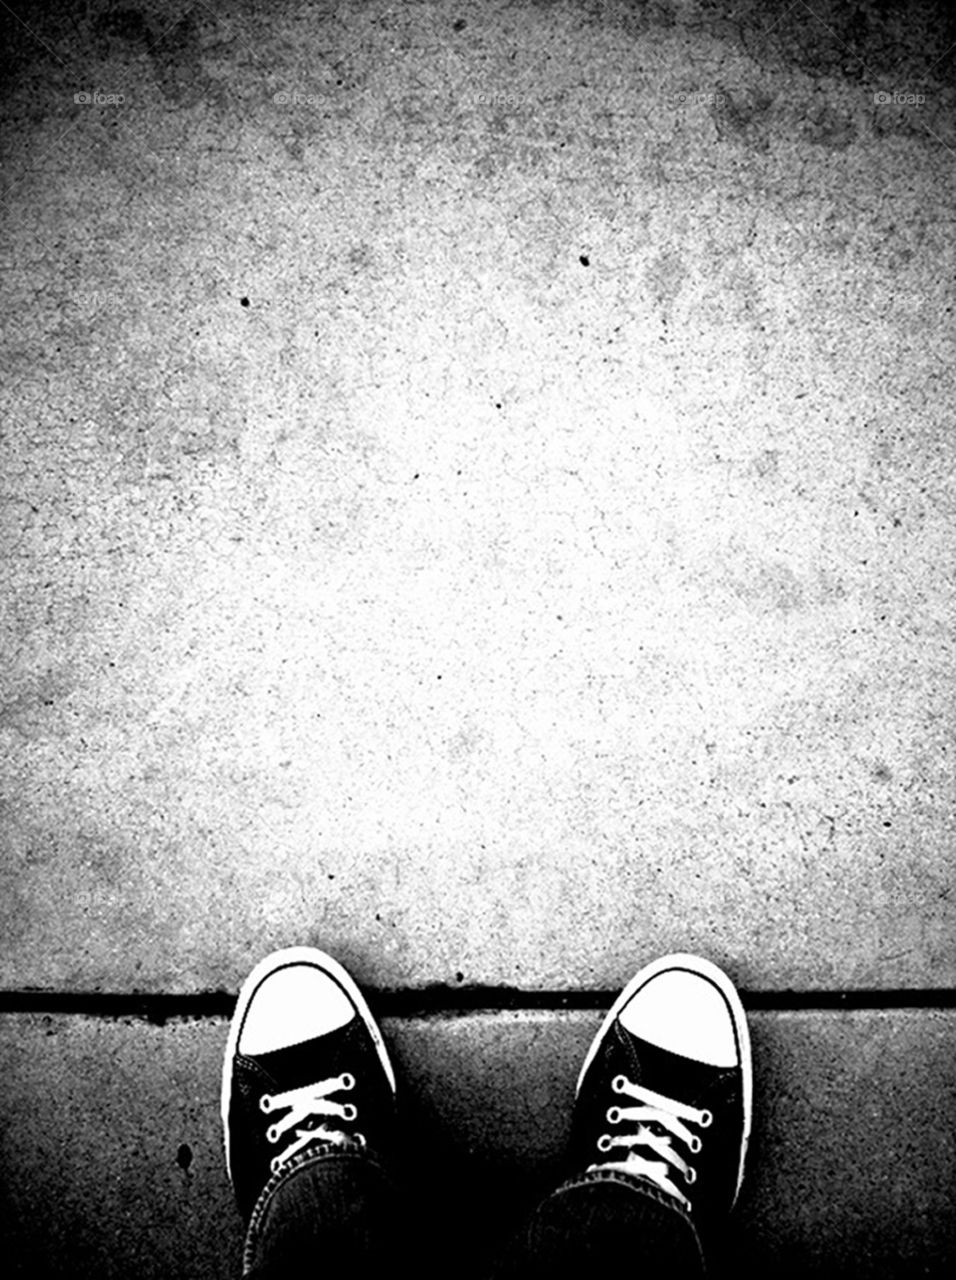 street shoes converse walk by darrellalonzi